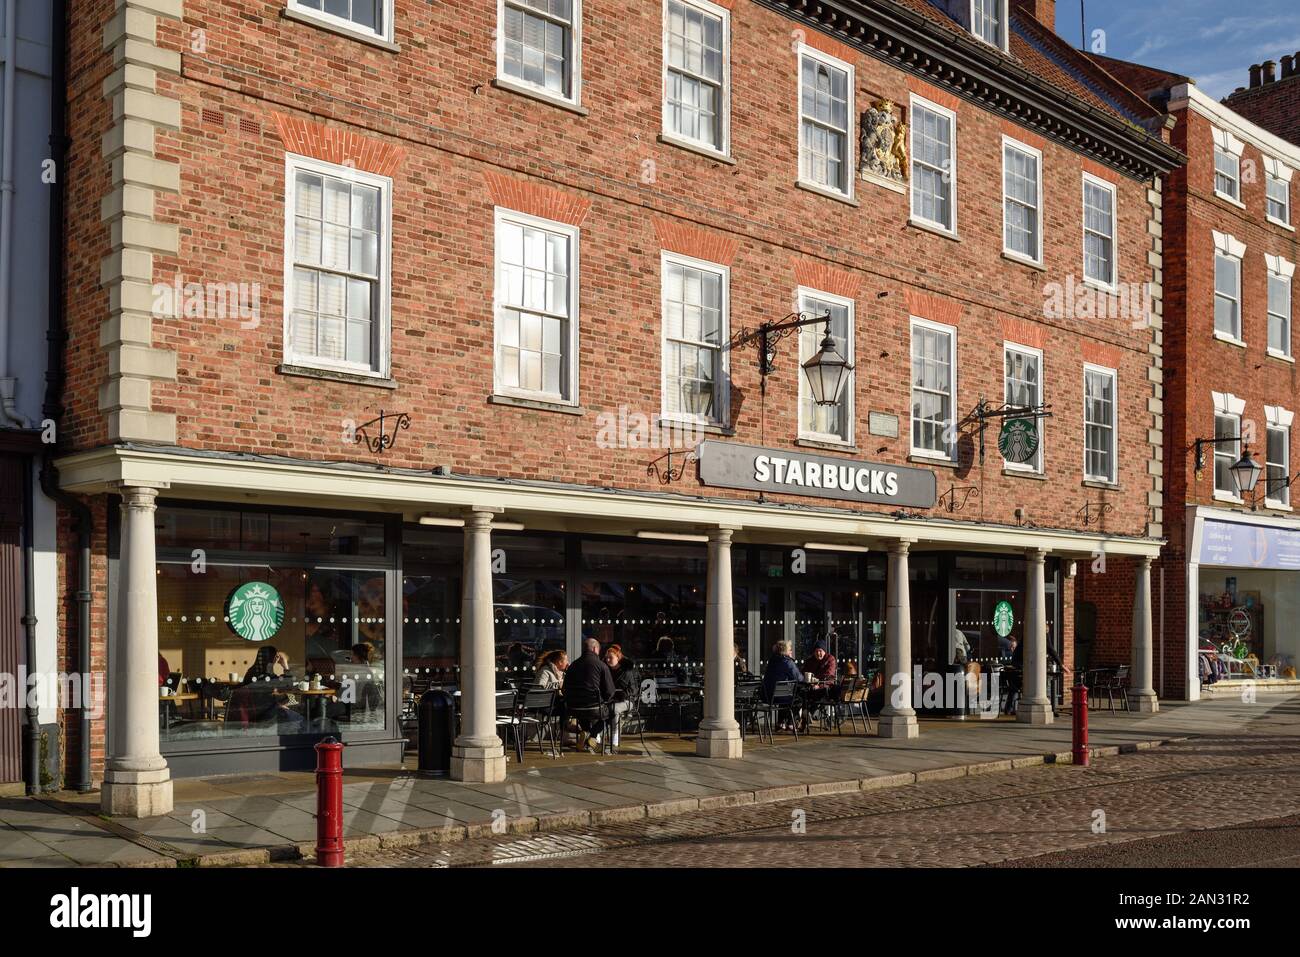 Newark-on-Trent historische Marktstadt in Nottinghamshire, UK. Starbucks Coffee House Marktplatz. Stockfoto